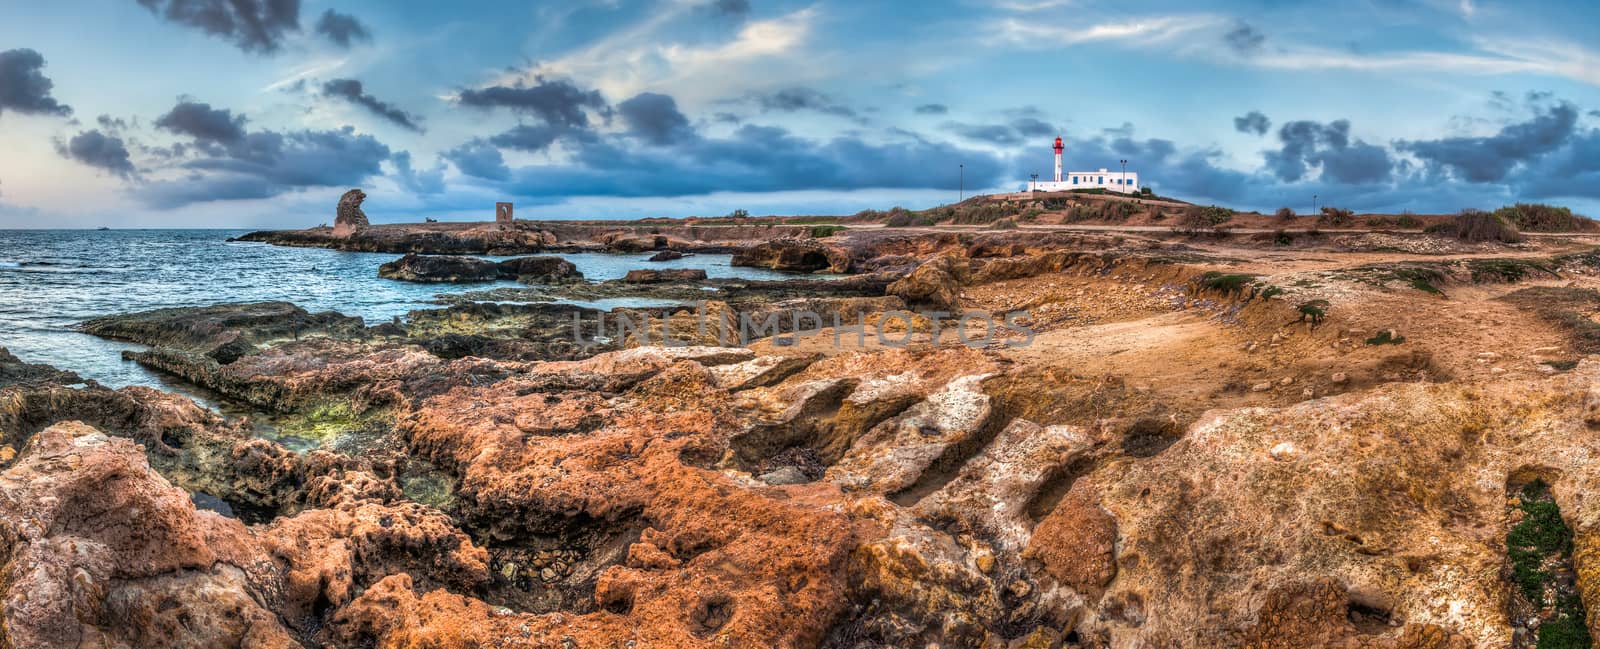 rocky coast with lighthouse by Kayco